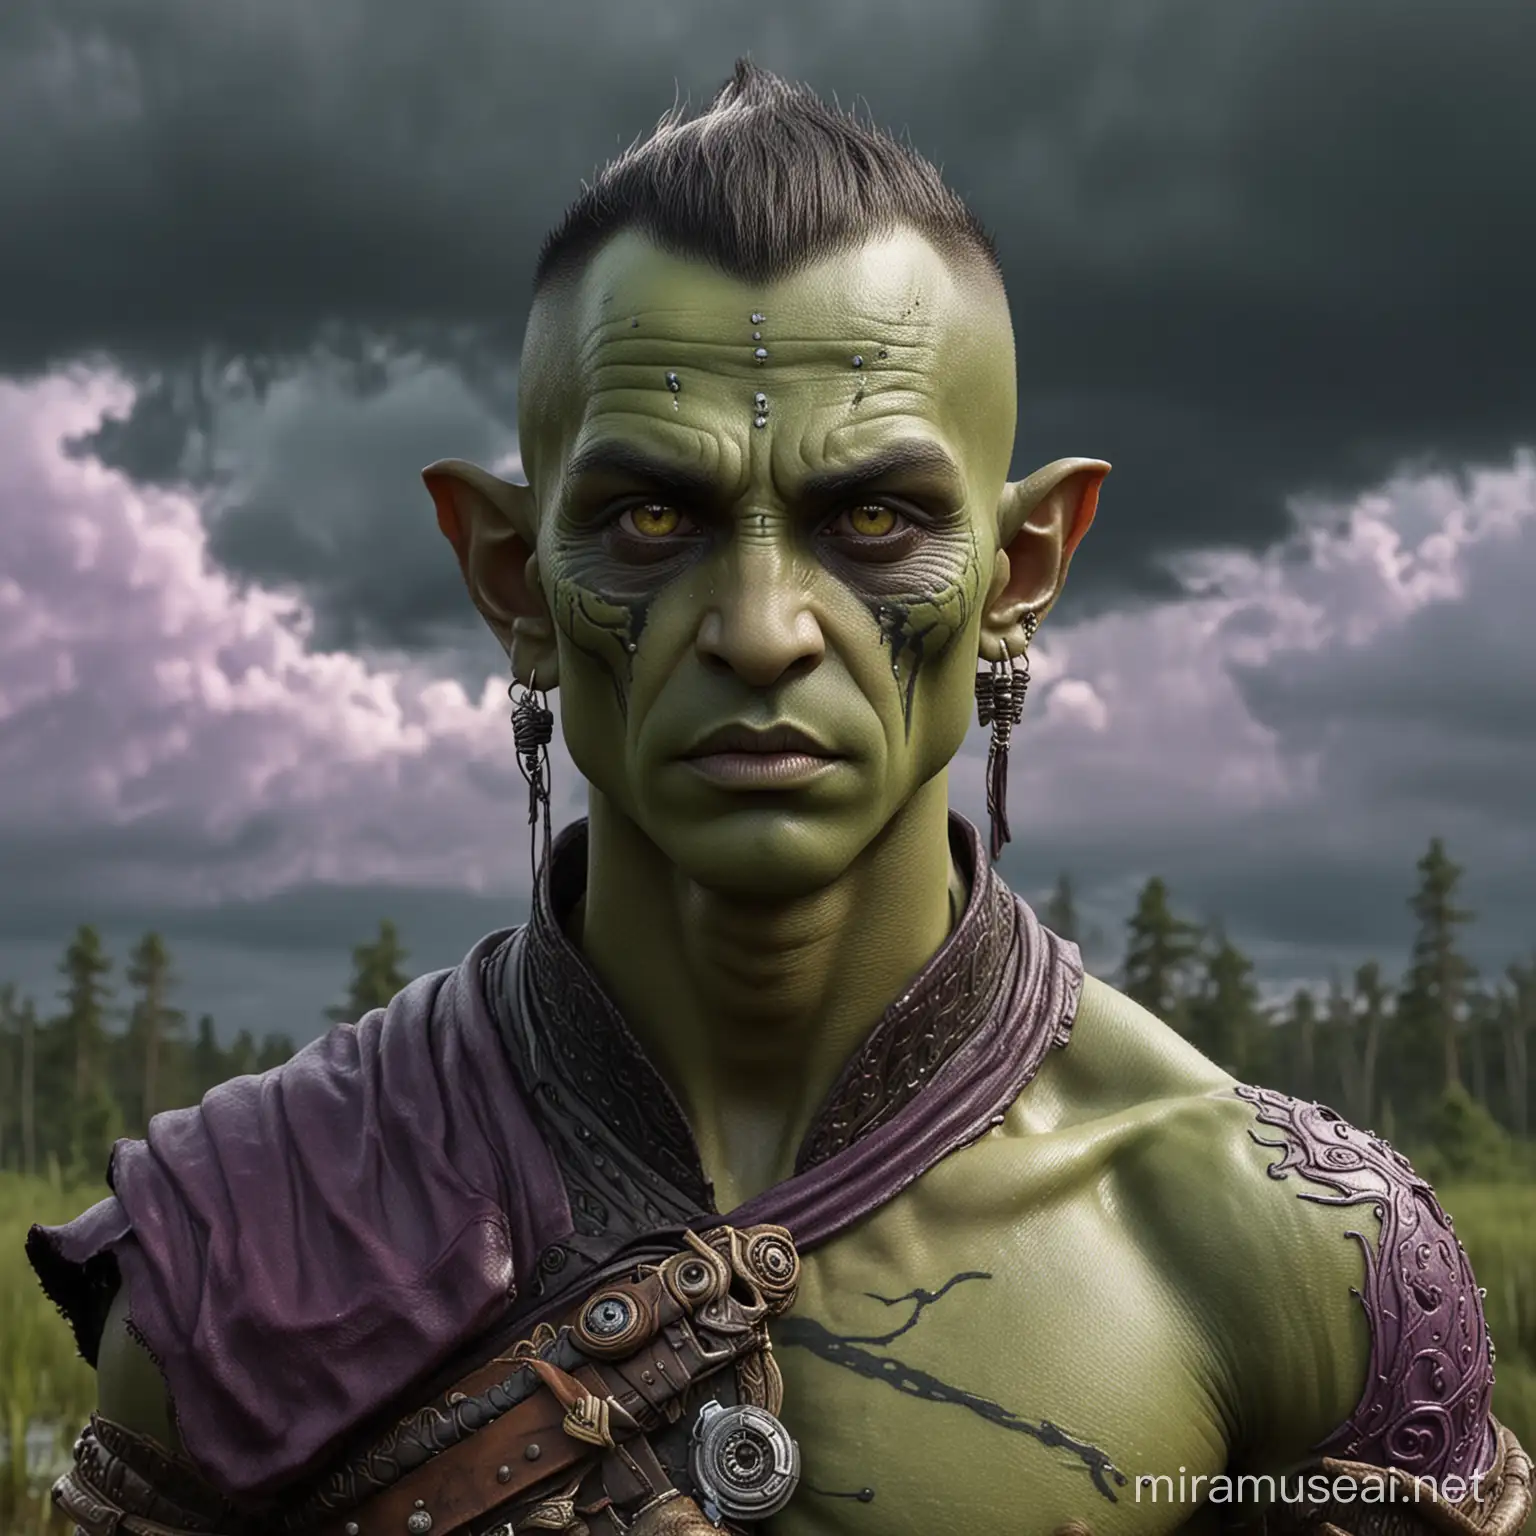 Hyperrealistic DD Style Alien Githyanki Monk in Surreal Swamp